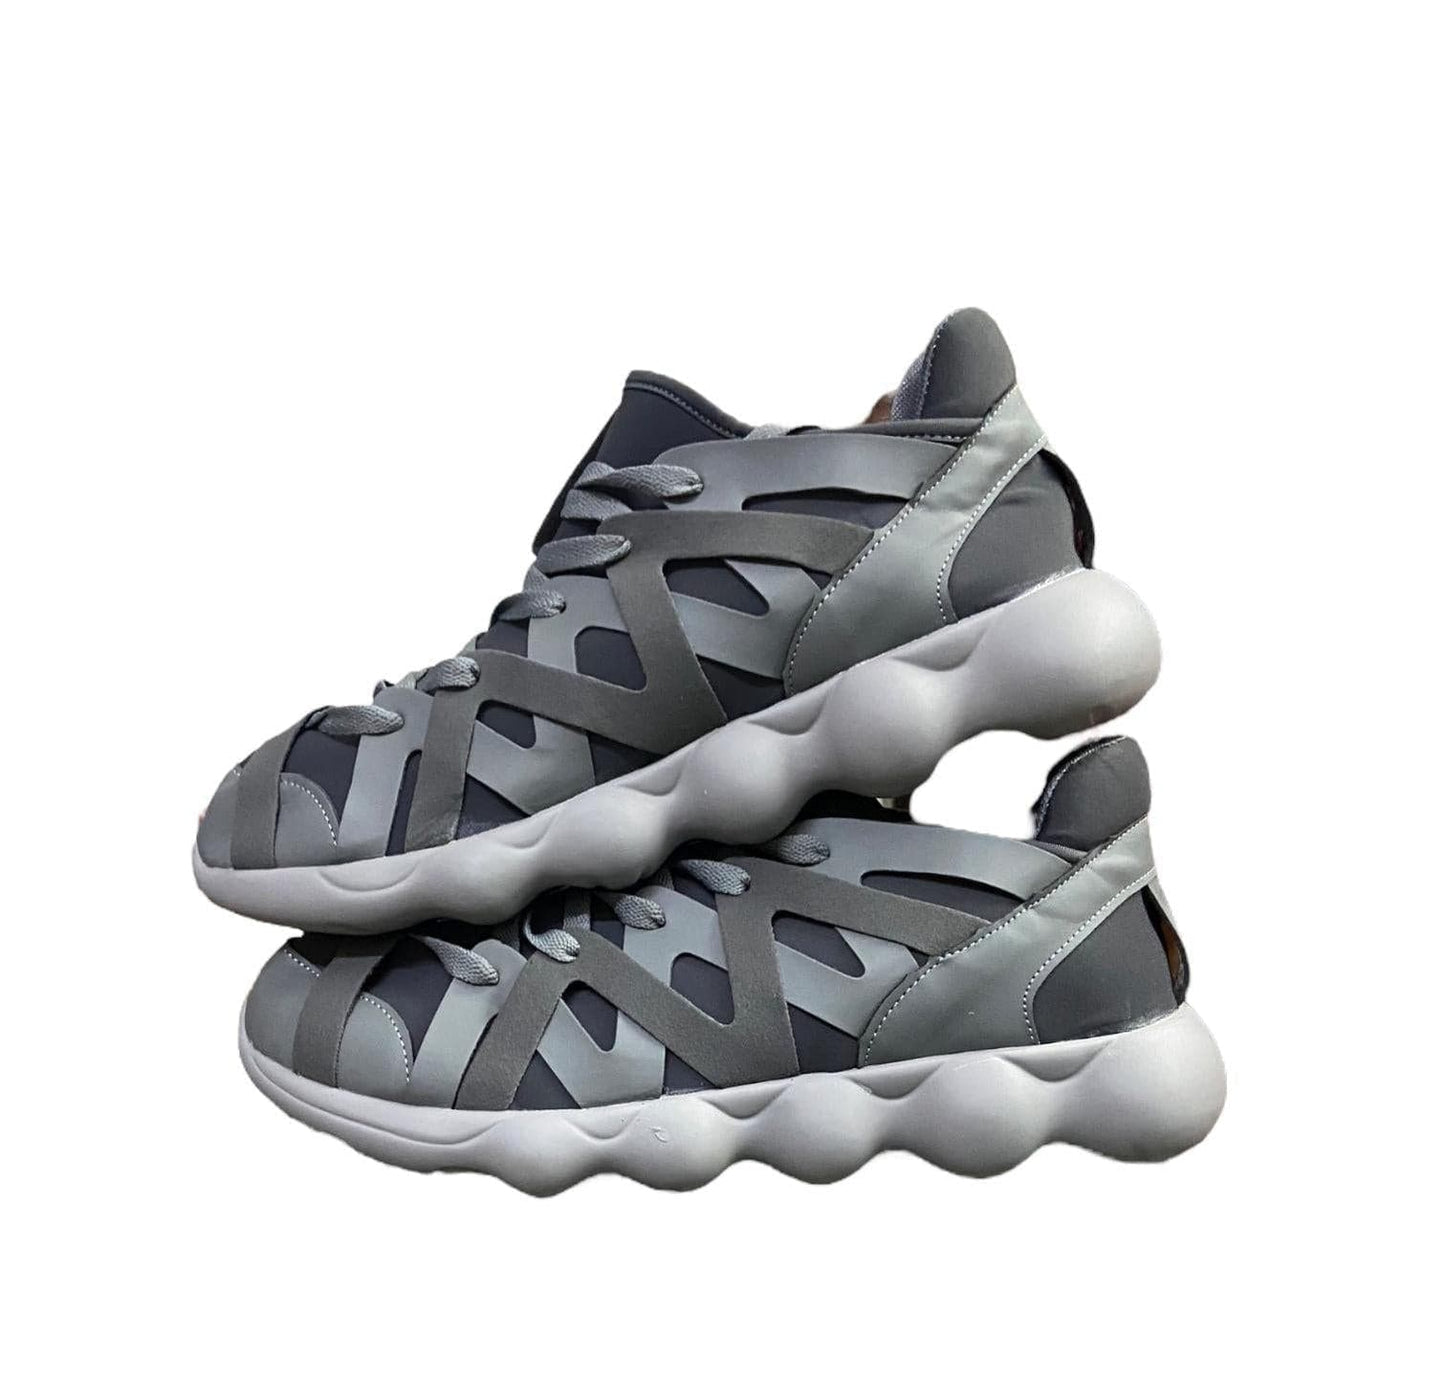 "Fashionray move forward" trail lace up mesh trainers shoes fashionray.in